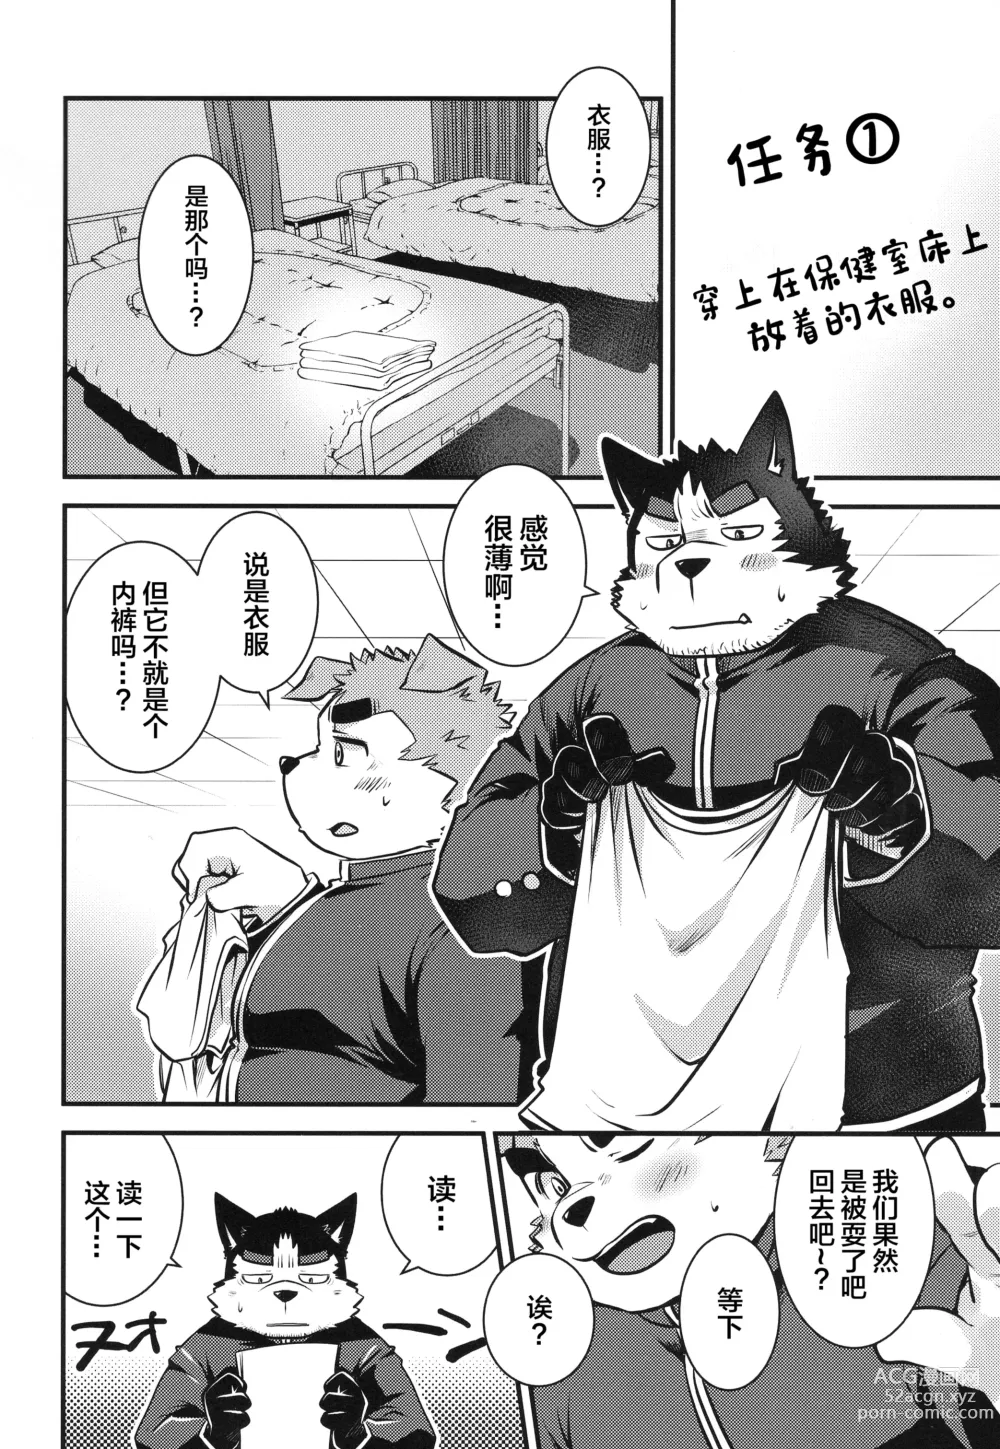 Page 10 of doujinshi Eccentric Shintai Kensa